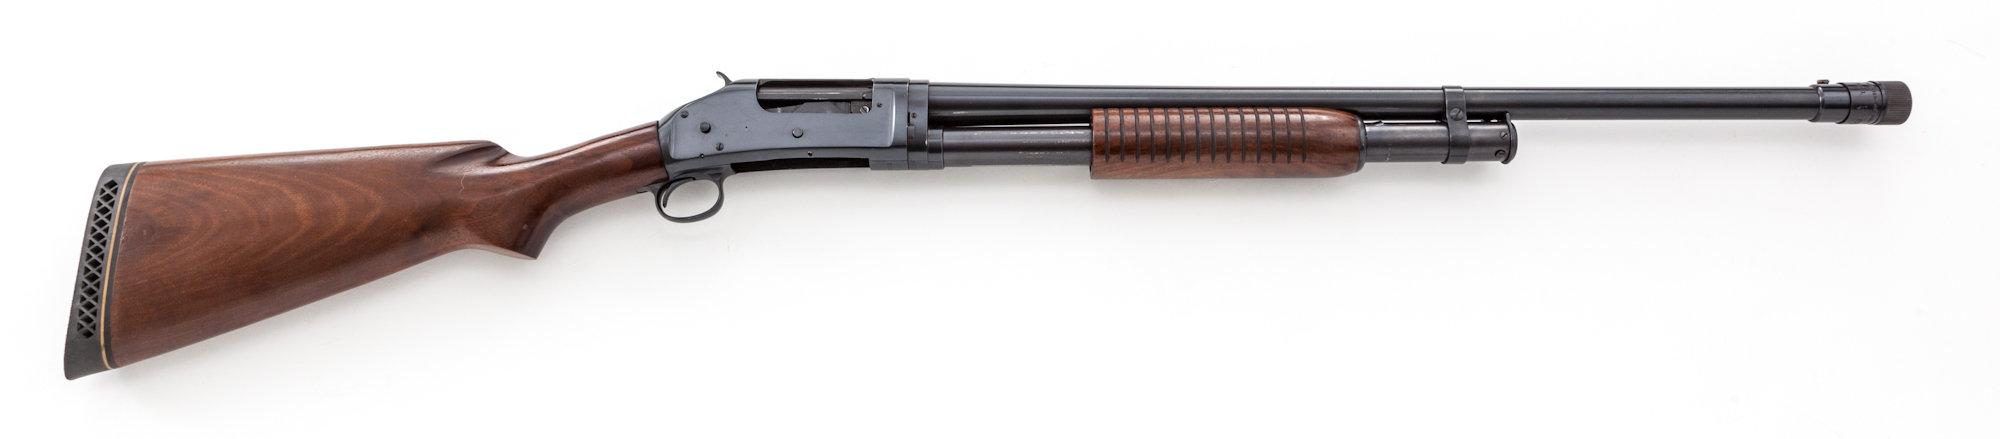 Very Late Winchester Model 97 Pump Shotgun